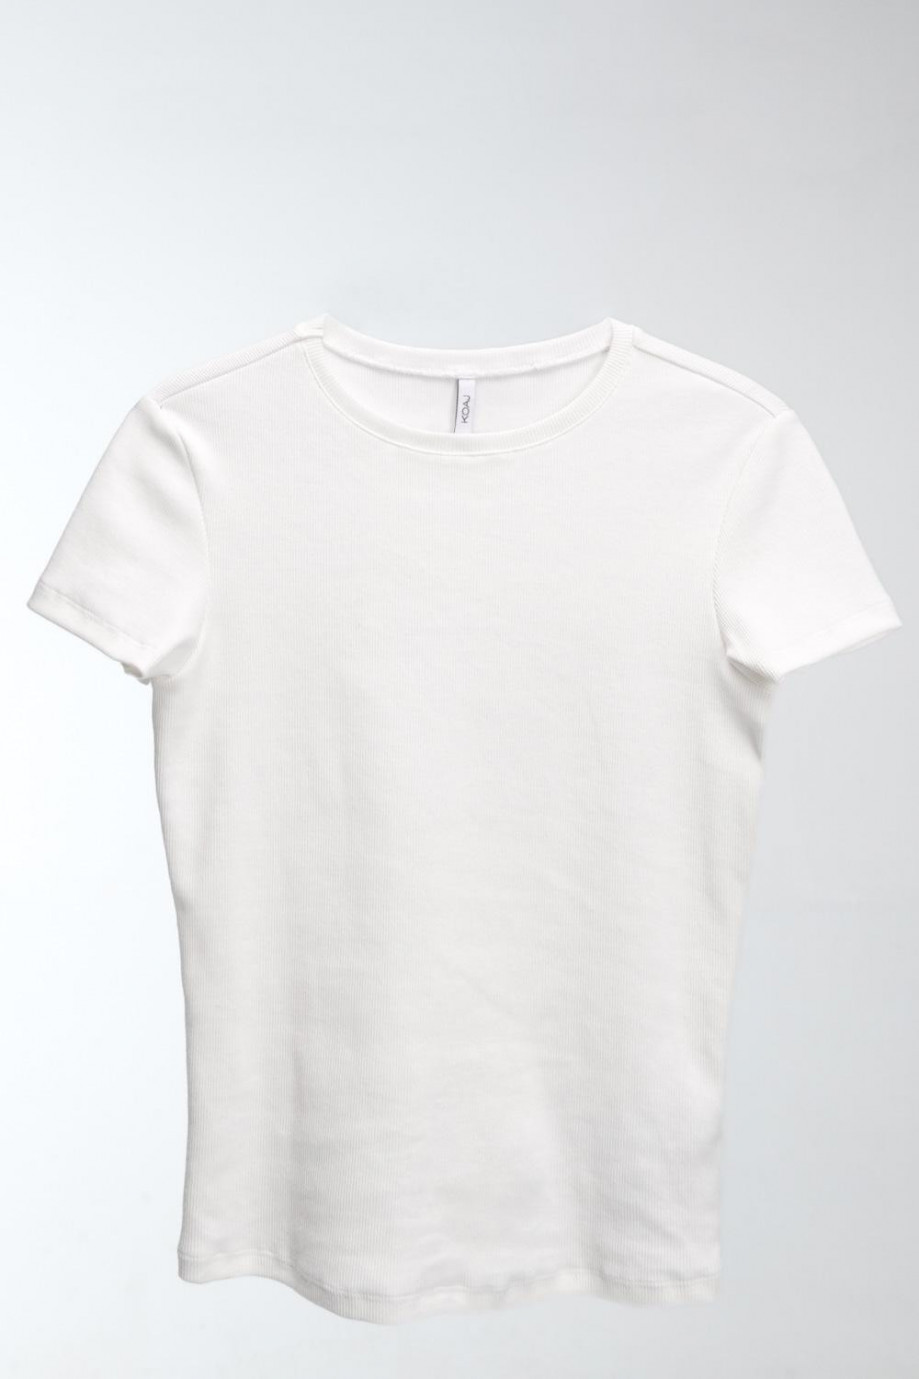 Camiseta unicolor manga corta y cuello redondo